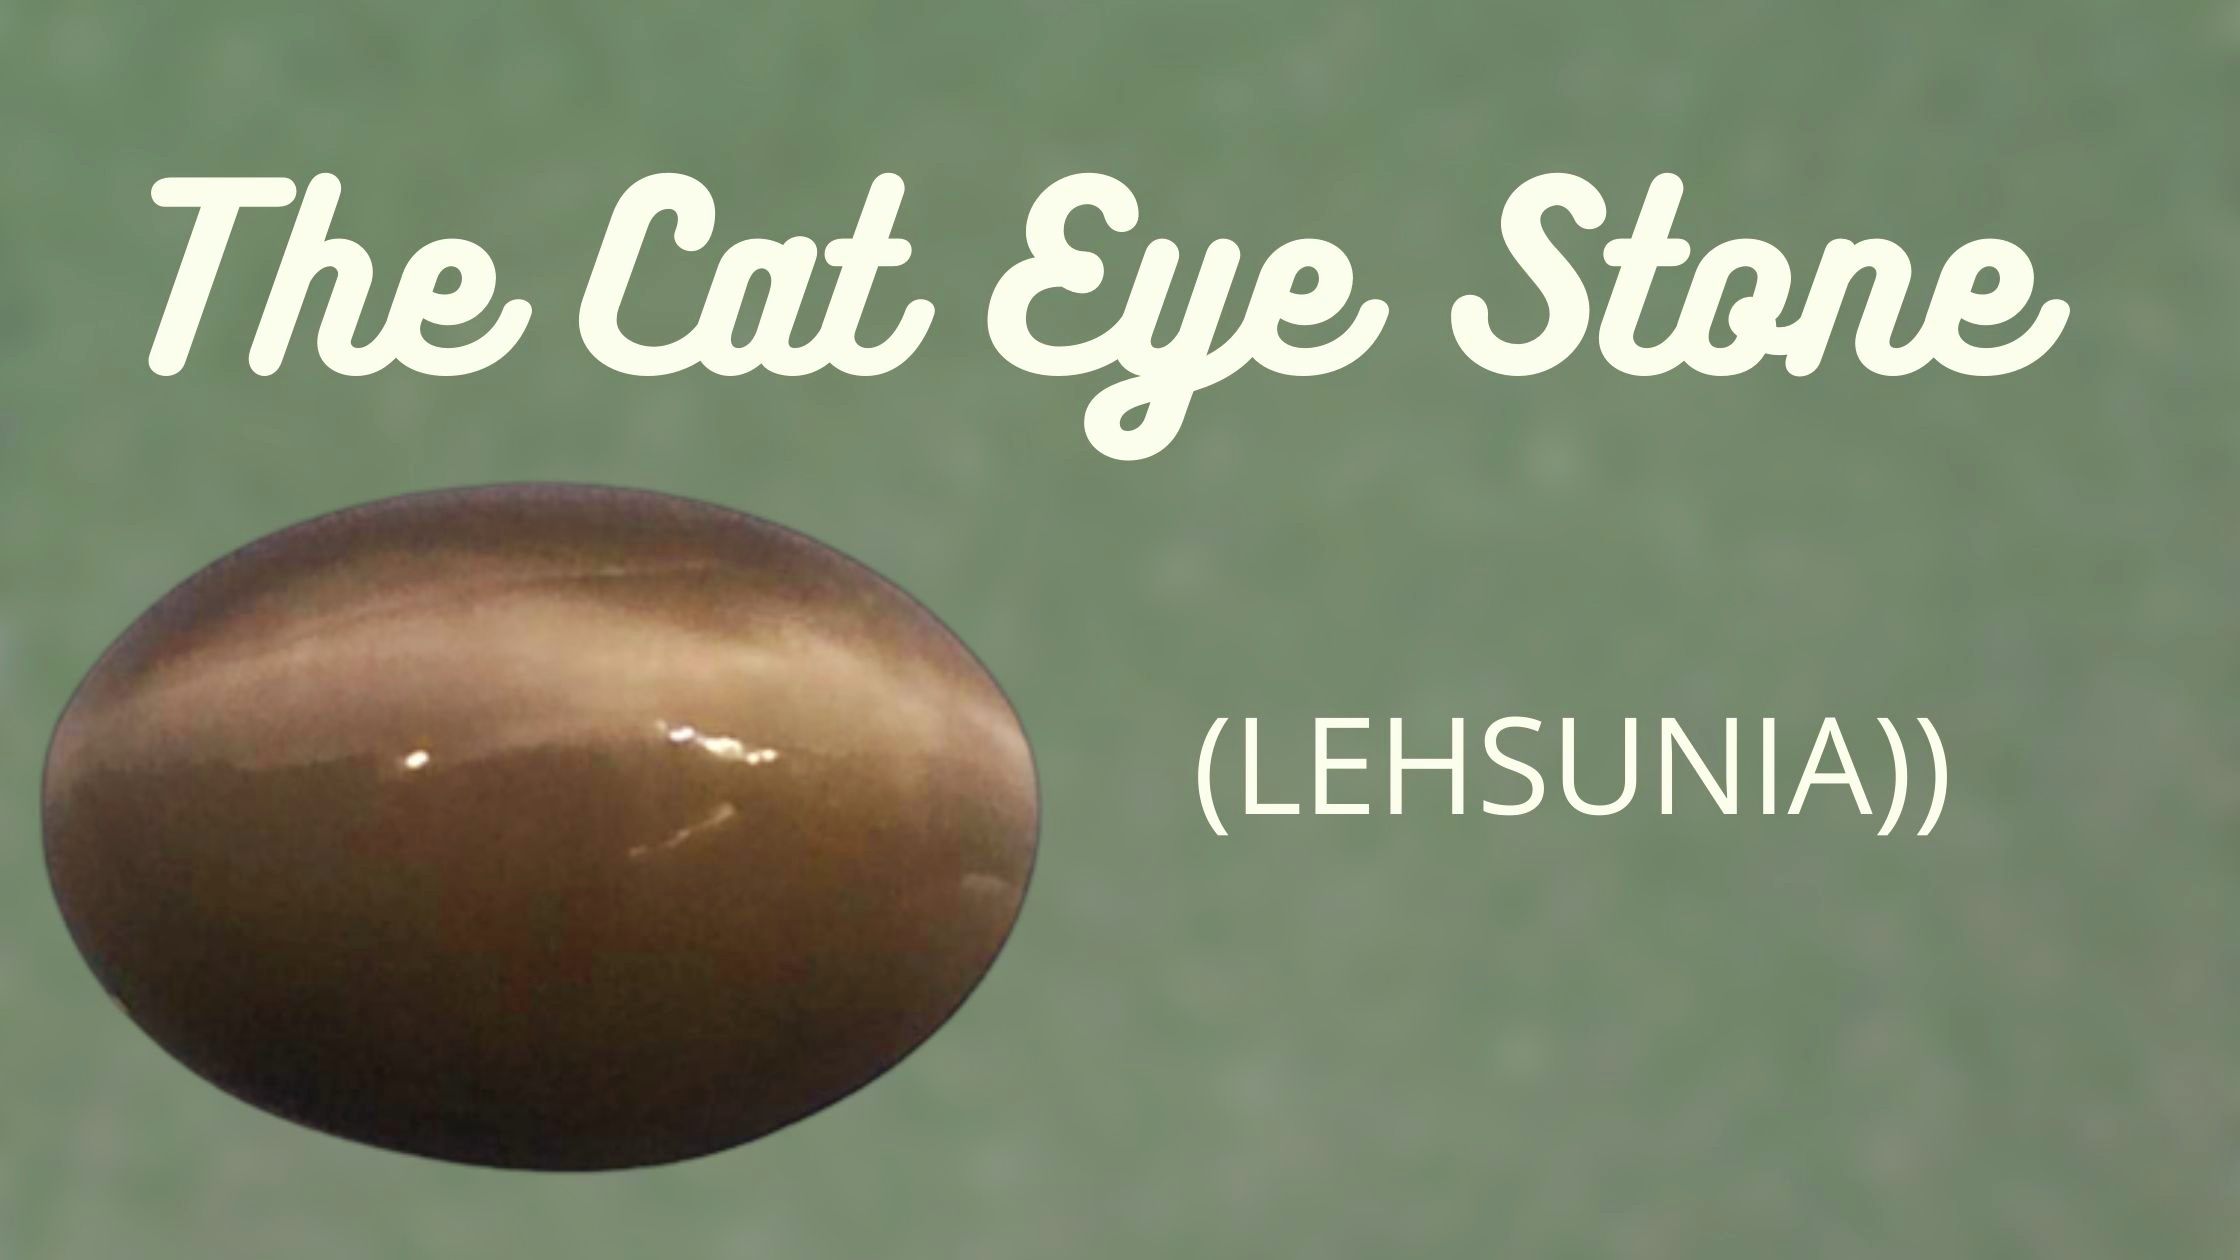 THE CAT’S-EYE STONE (LEHSUNIA)